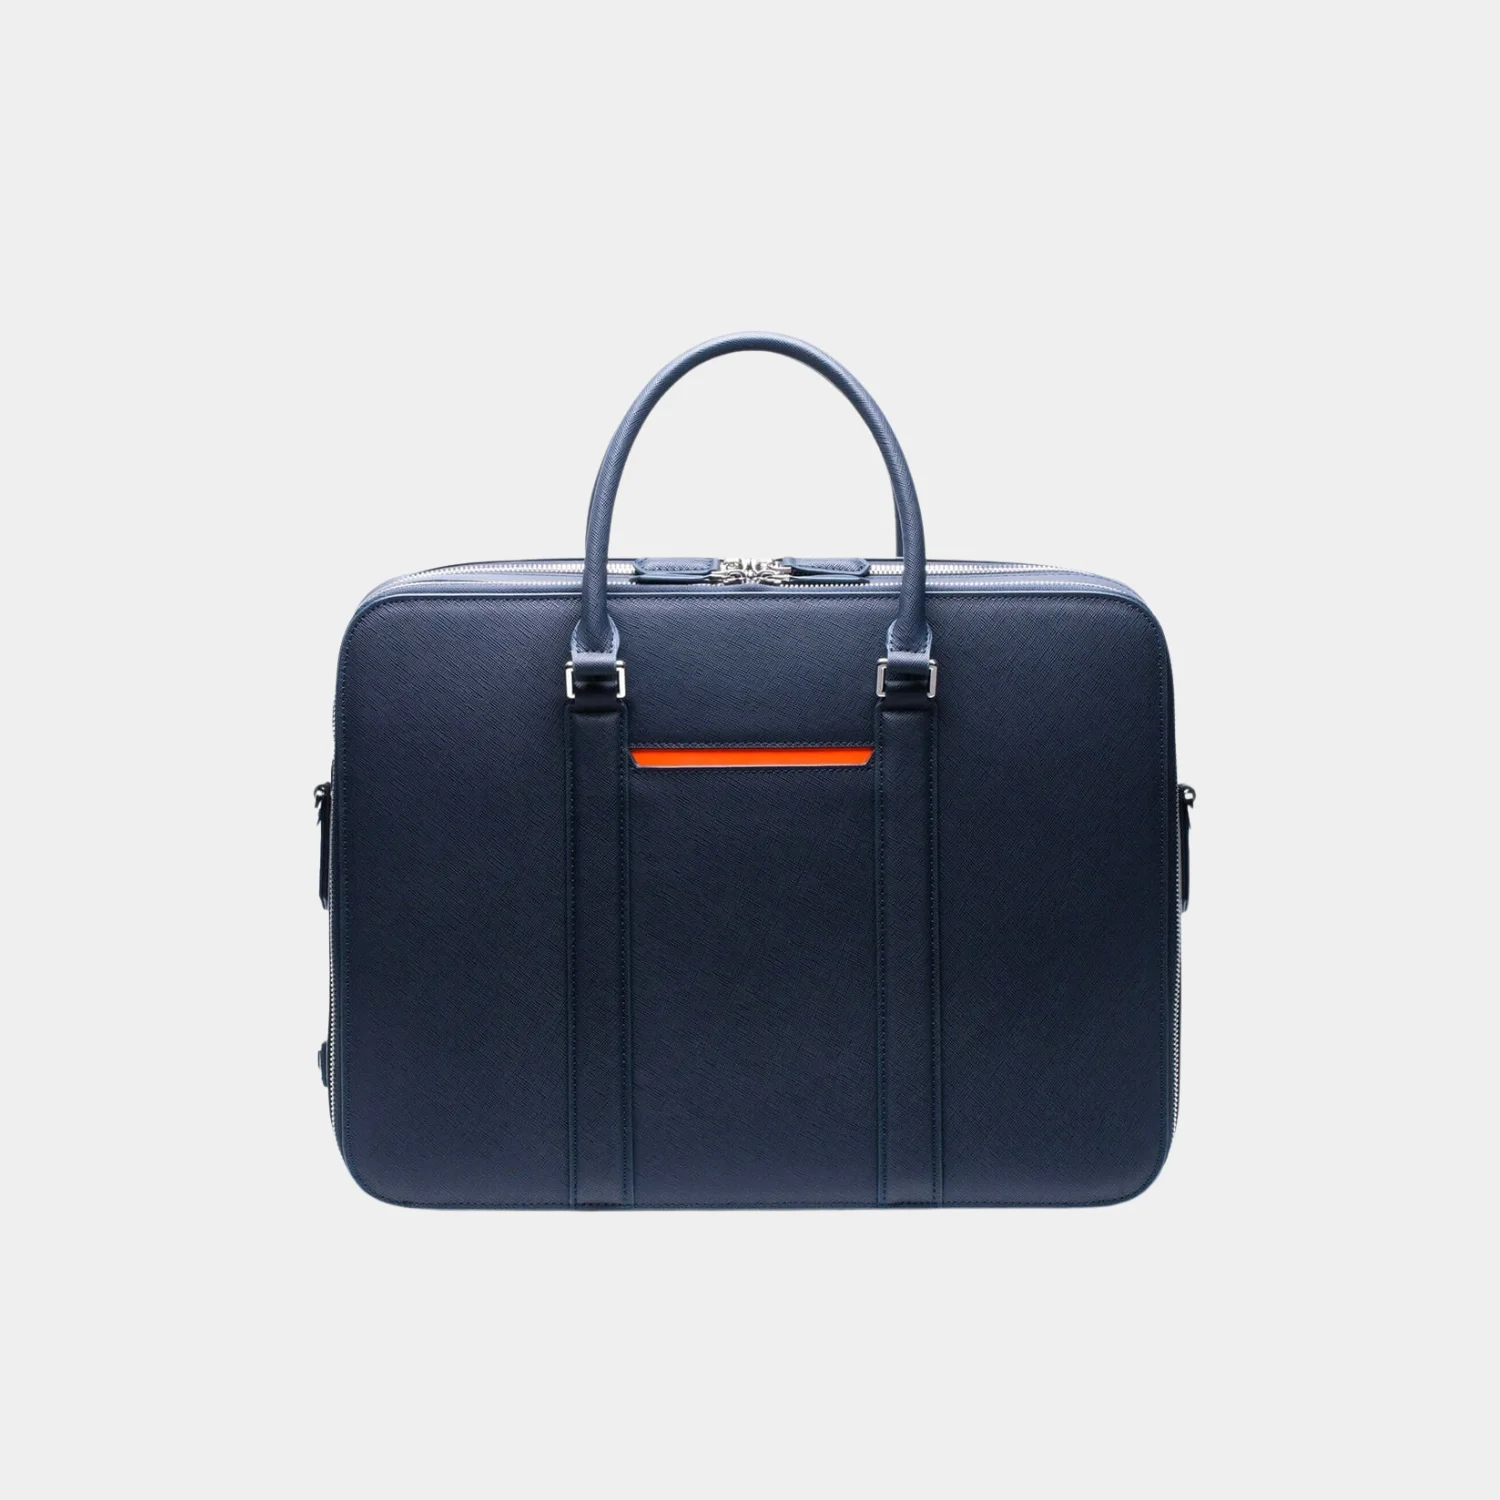 Classy Blue Leather Double-Zip Laptop Briefcase Bag